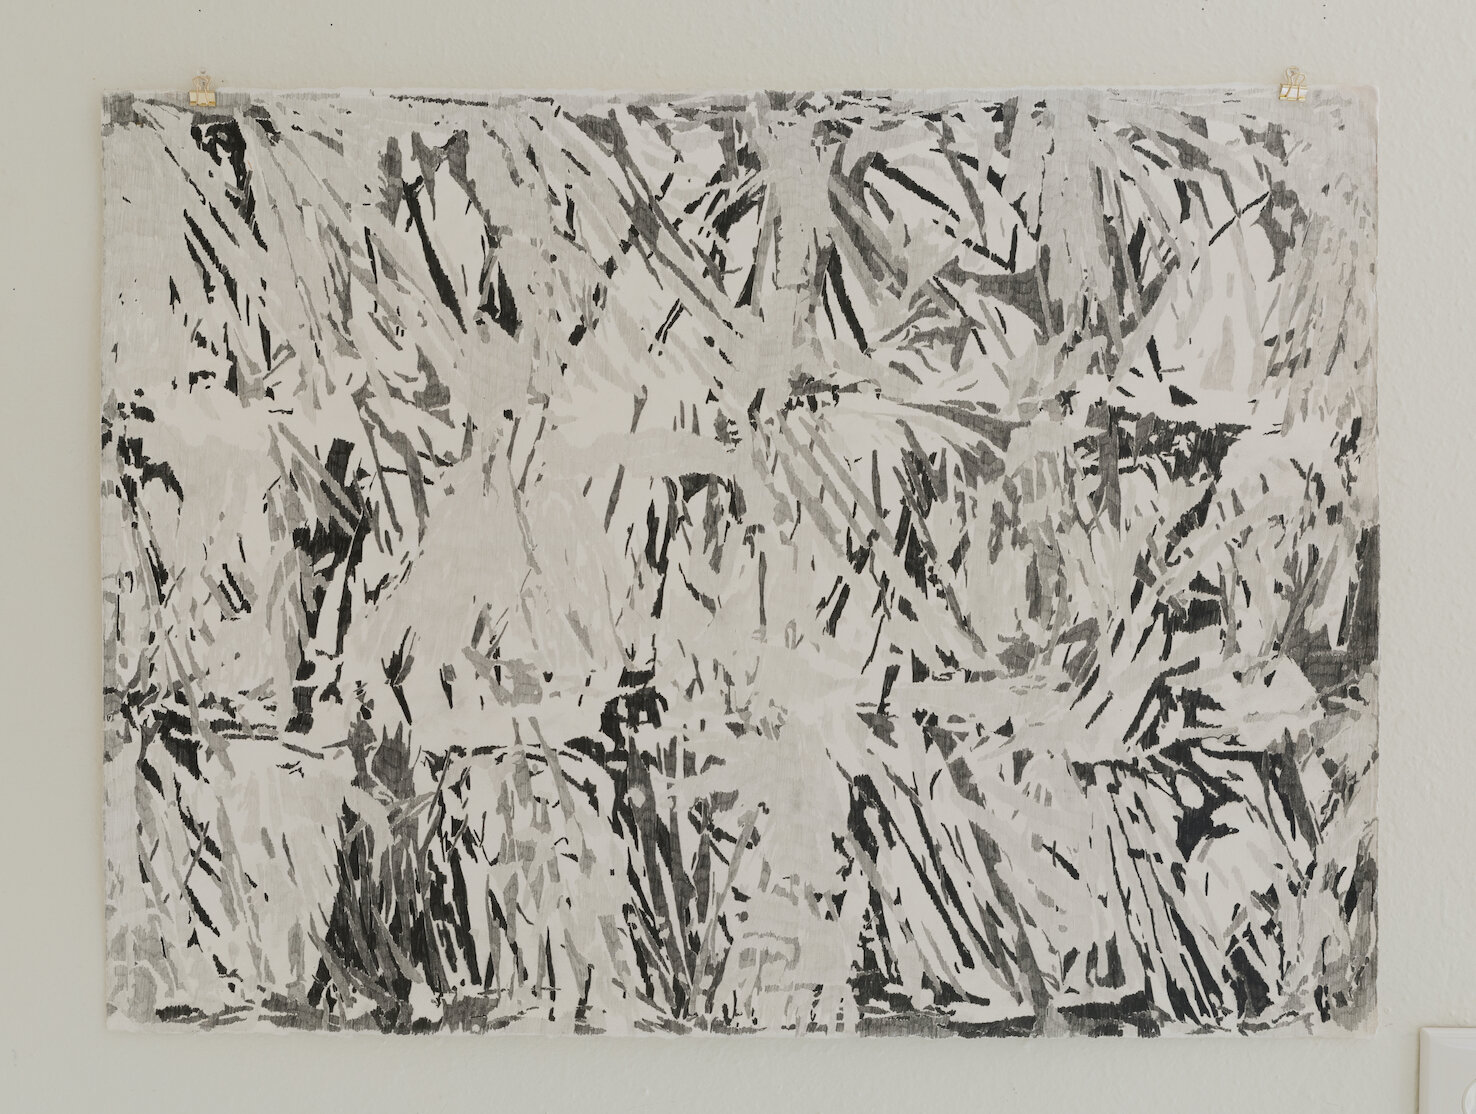  Michael Iauch ​ Kleenex 3,  2​ 019, graphite on paper 22 x 30 inches 